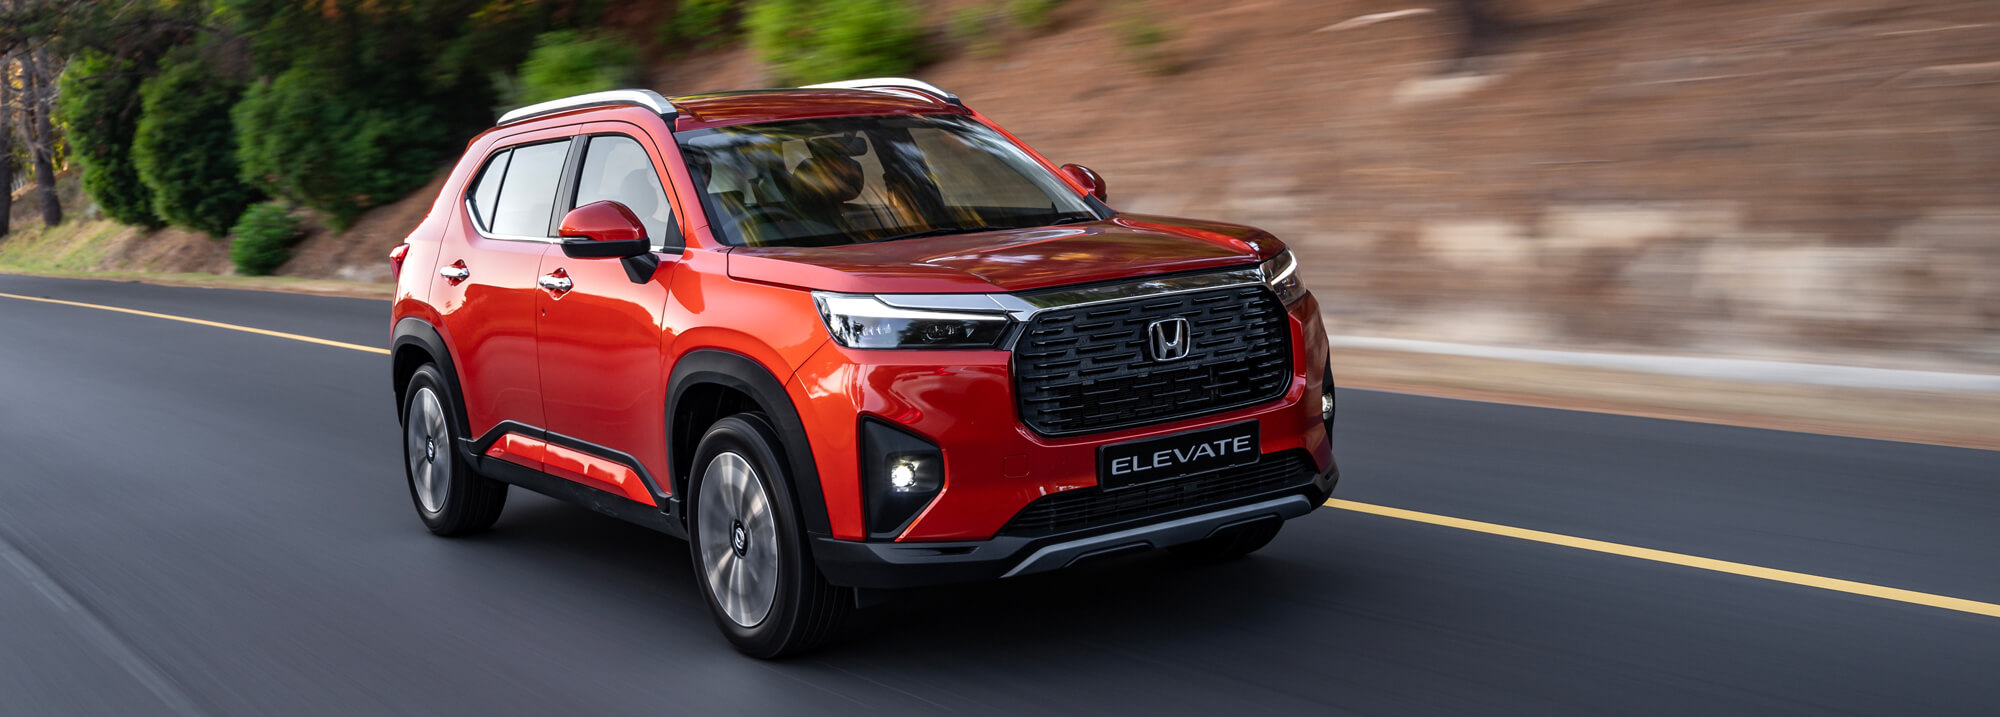 Value for money Honda Elevate set to disrupt SUV segment video-banner